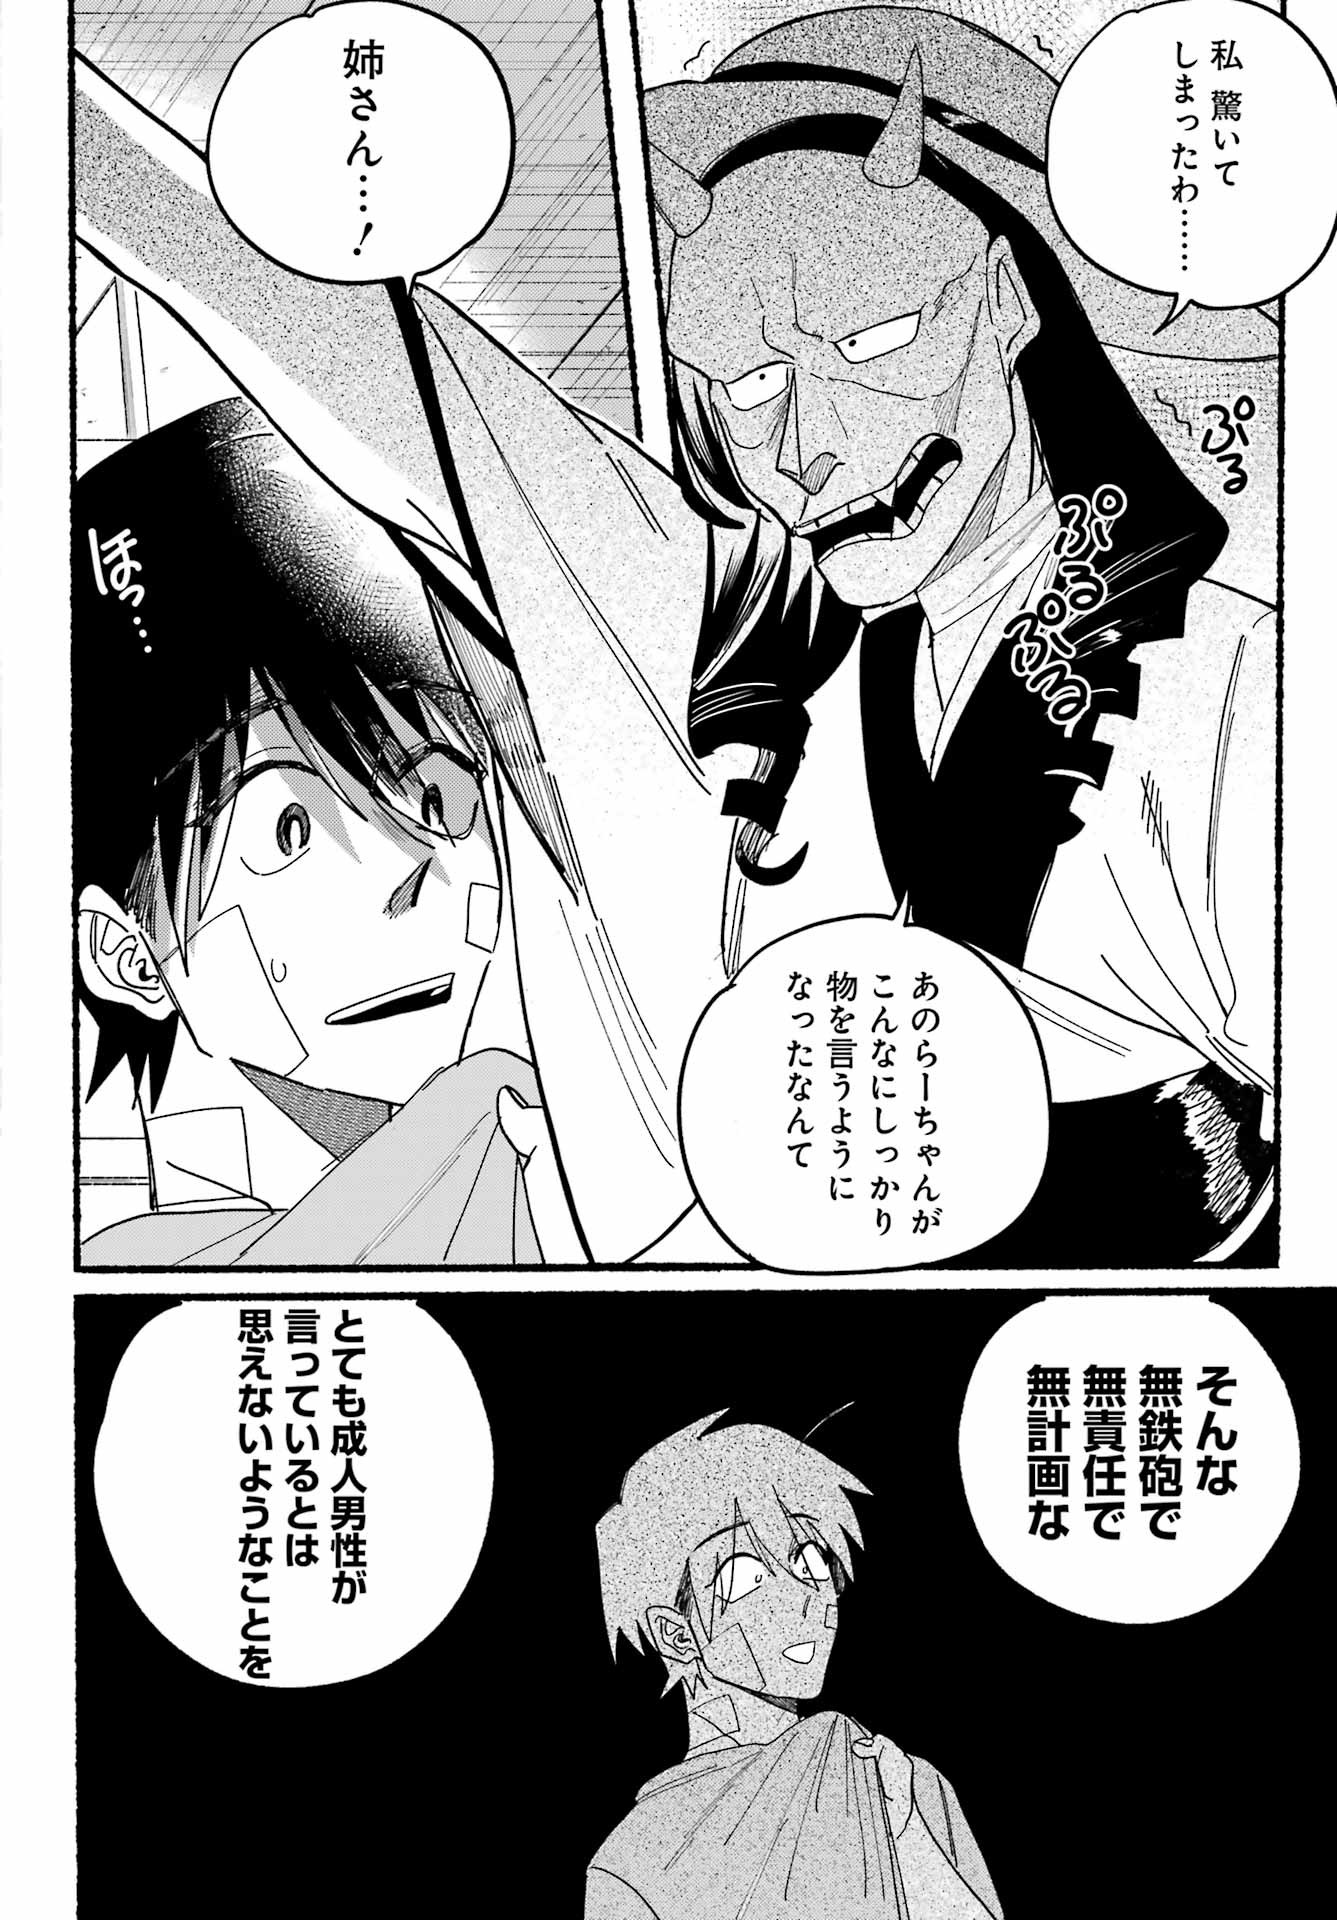 Rokurei - Tenseishi Rinne Kuyakusho Dairokkanbu Joreika Katsudouki - Chapter 15 - Page 12